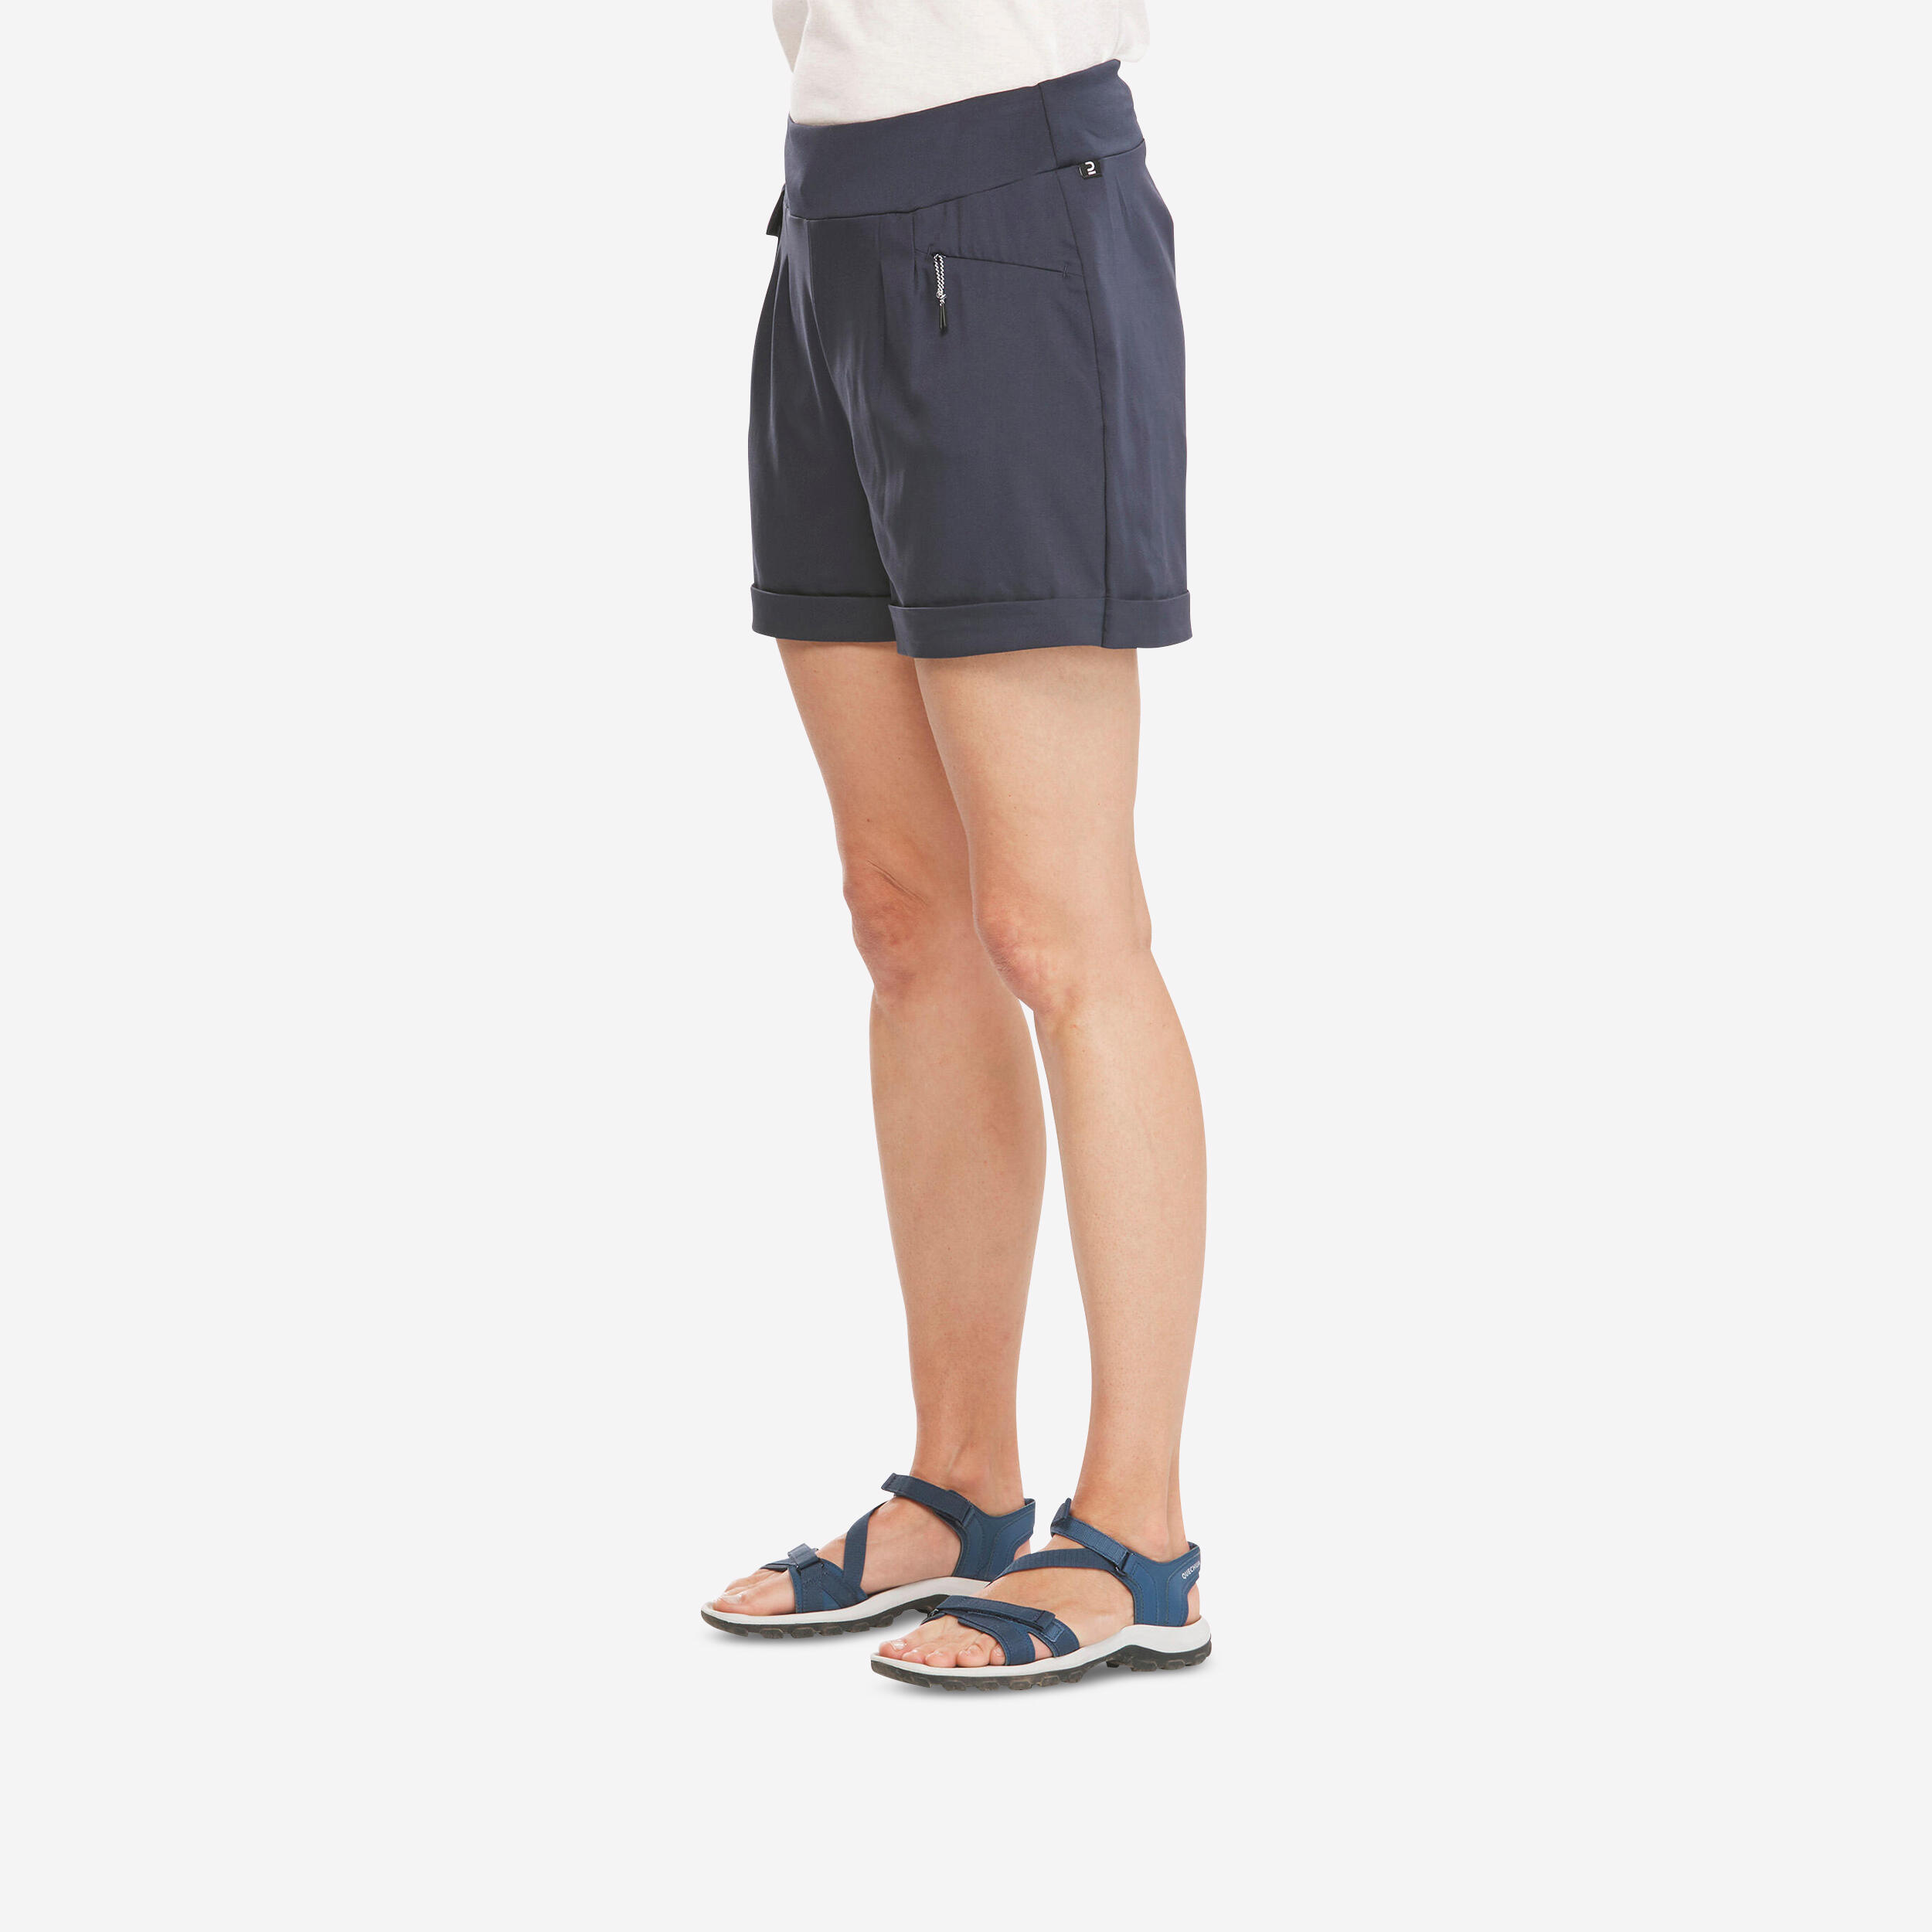 Women's Hiking Shorts - MT 500 Khaki